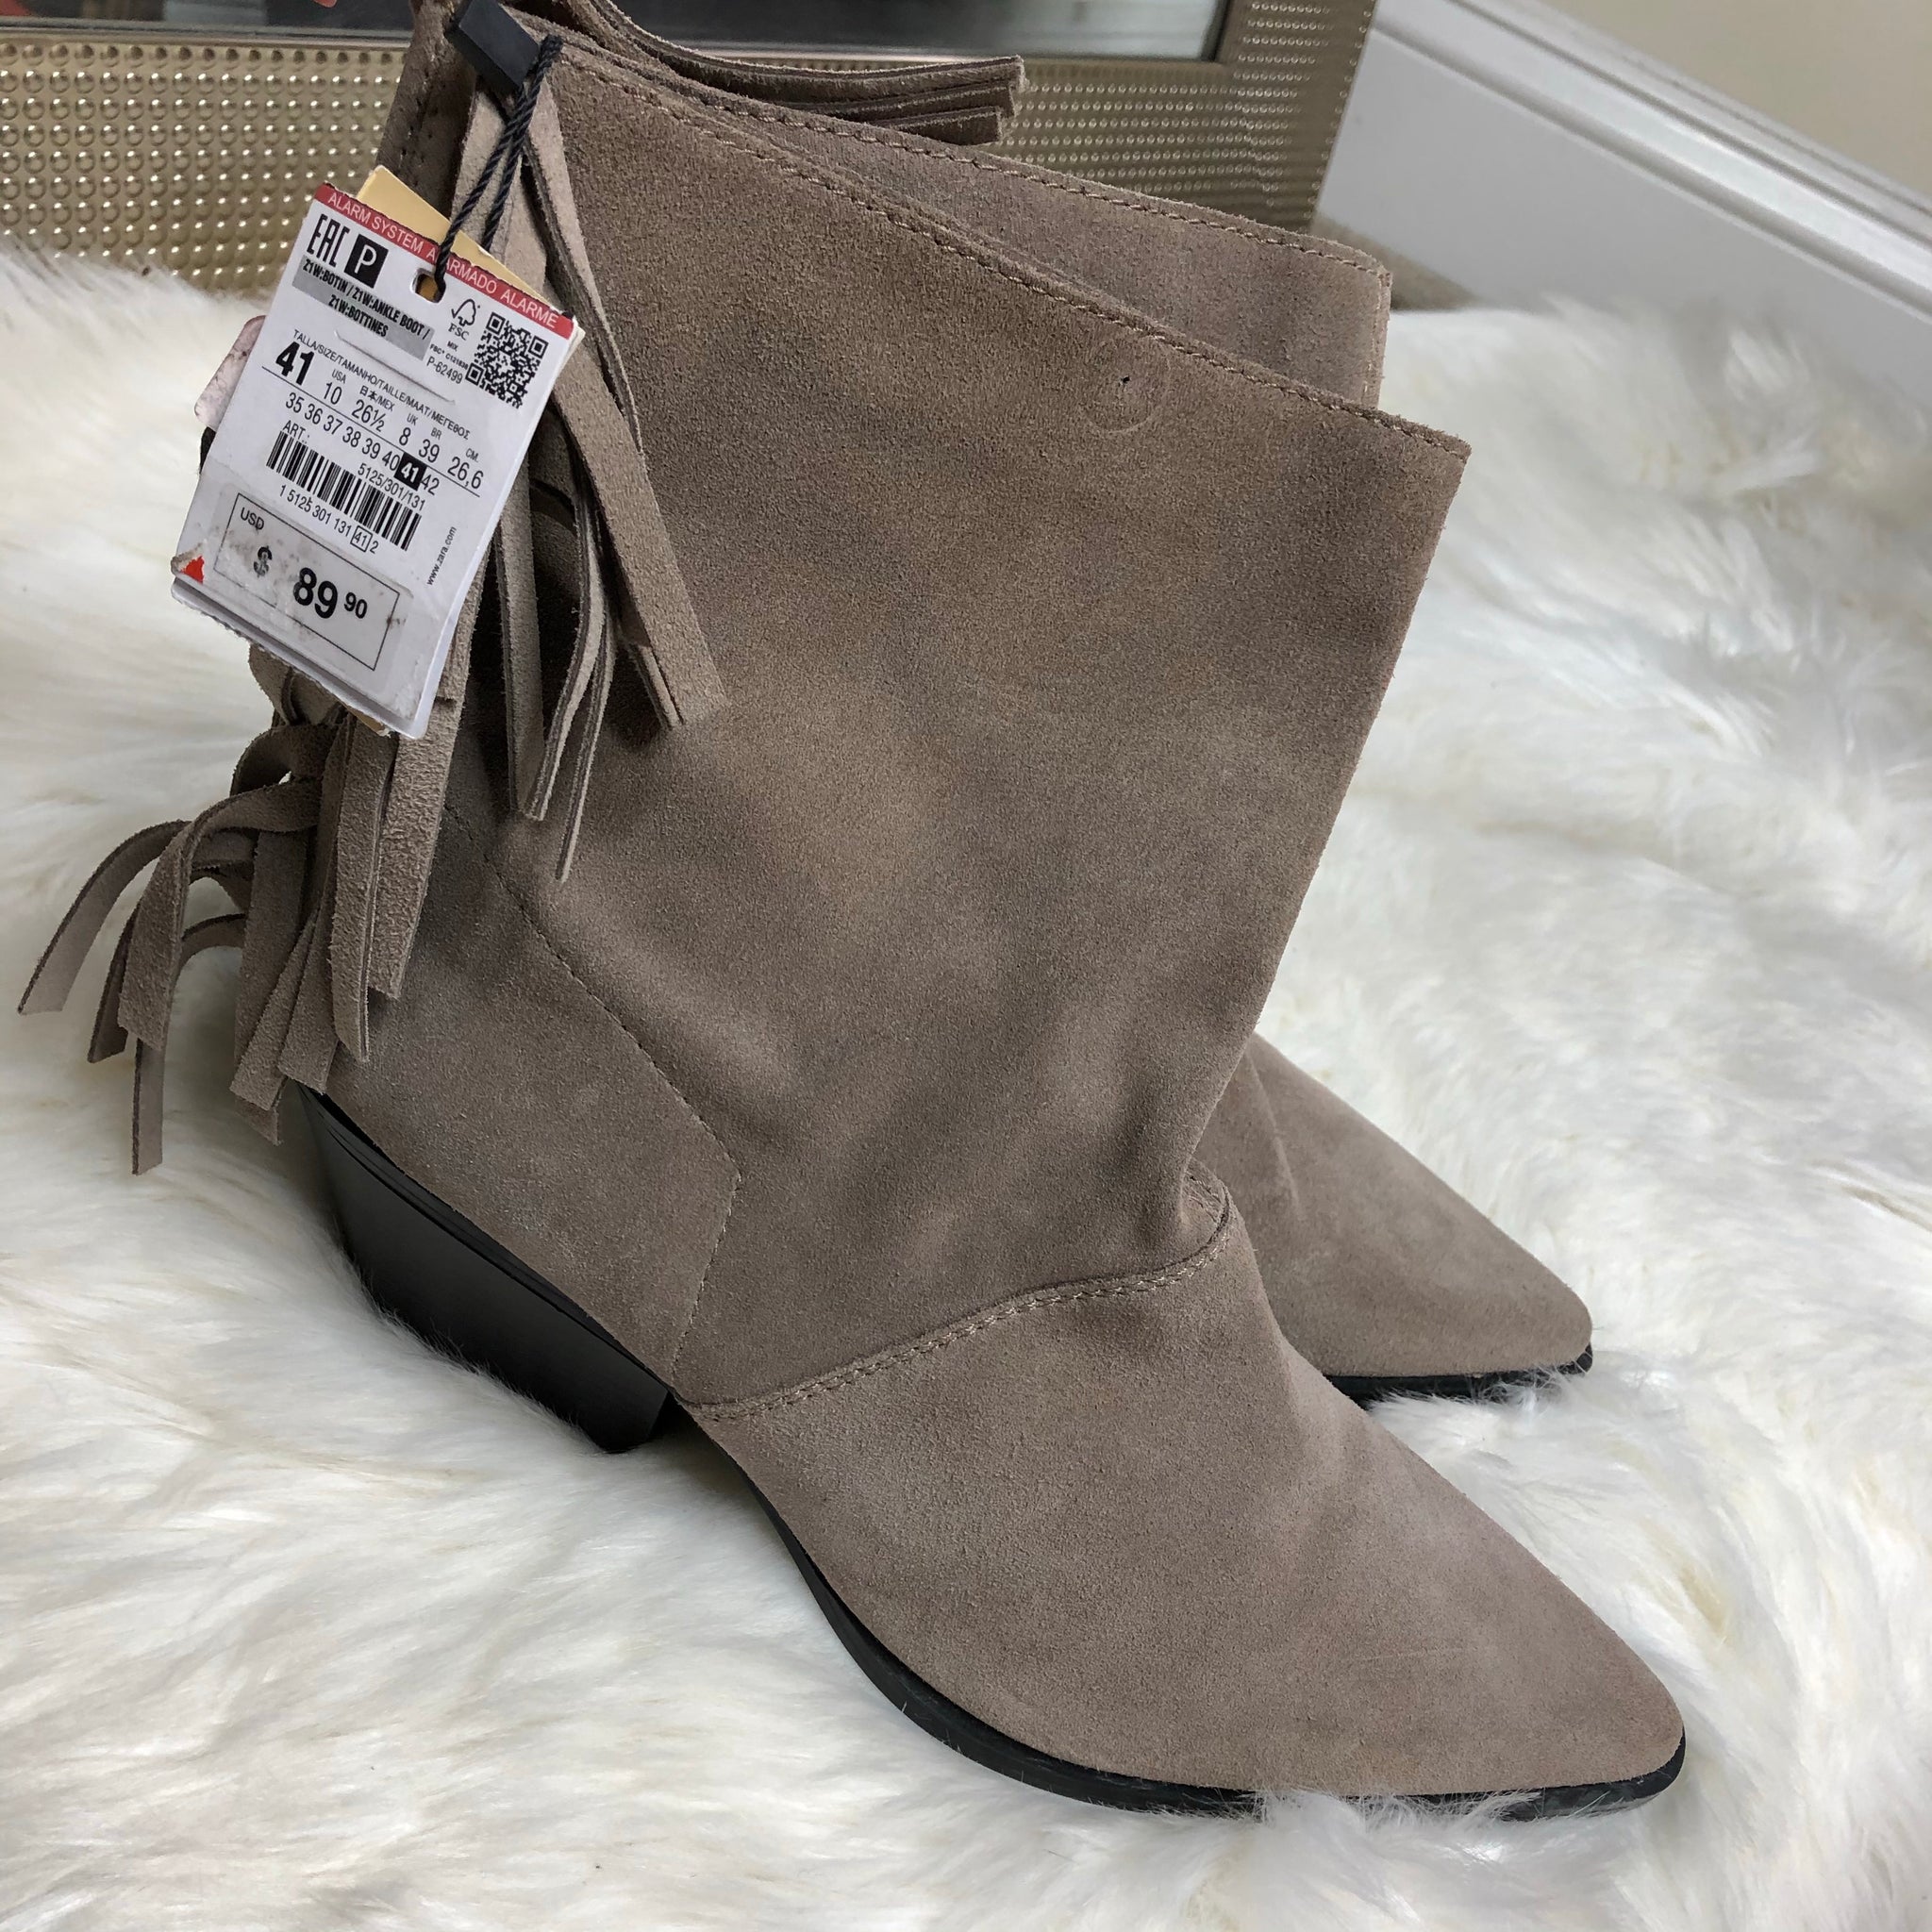 Zara Fringe Ankle Boots Size 10.5 – The 